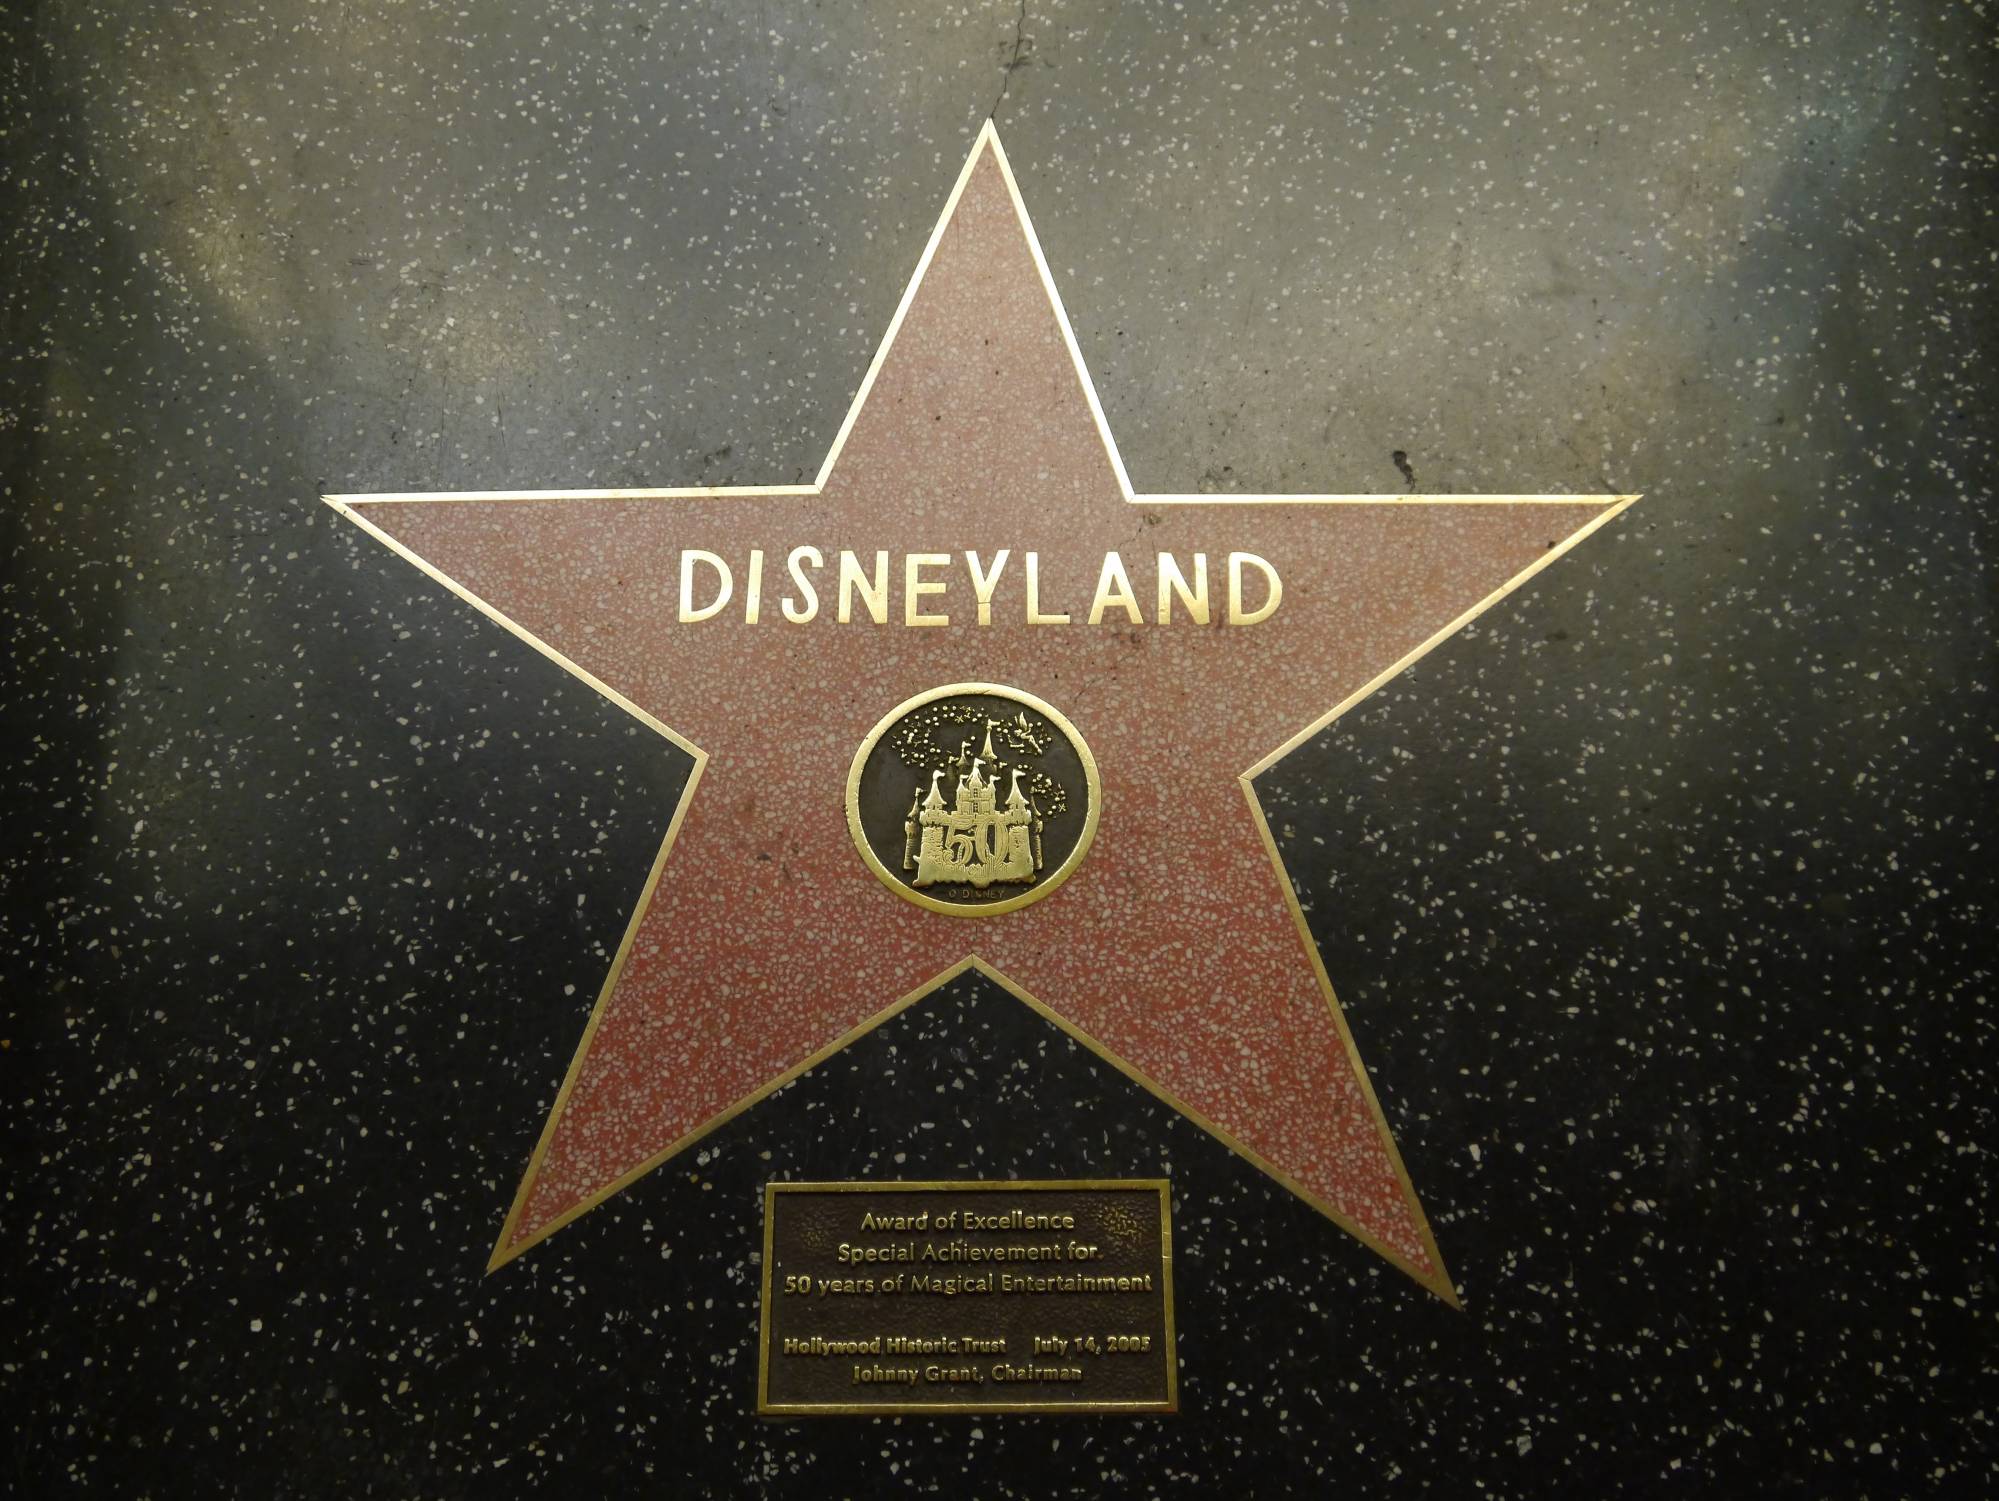 Hollywood Walk of Fame - Disneyland star